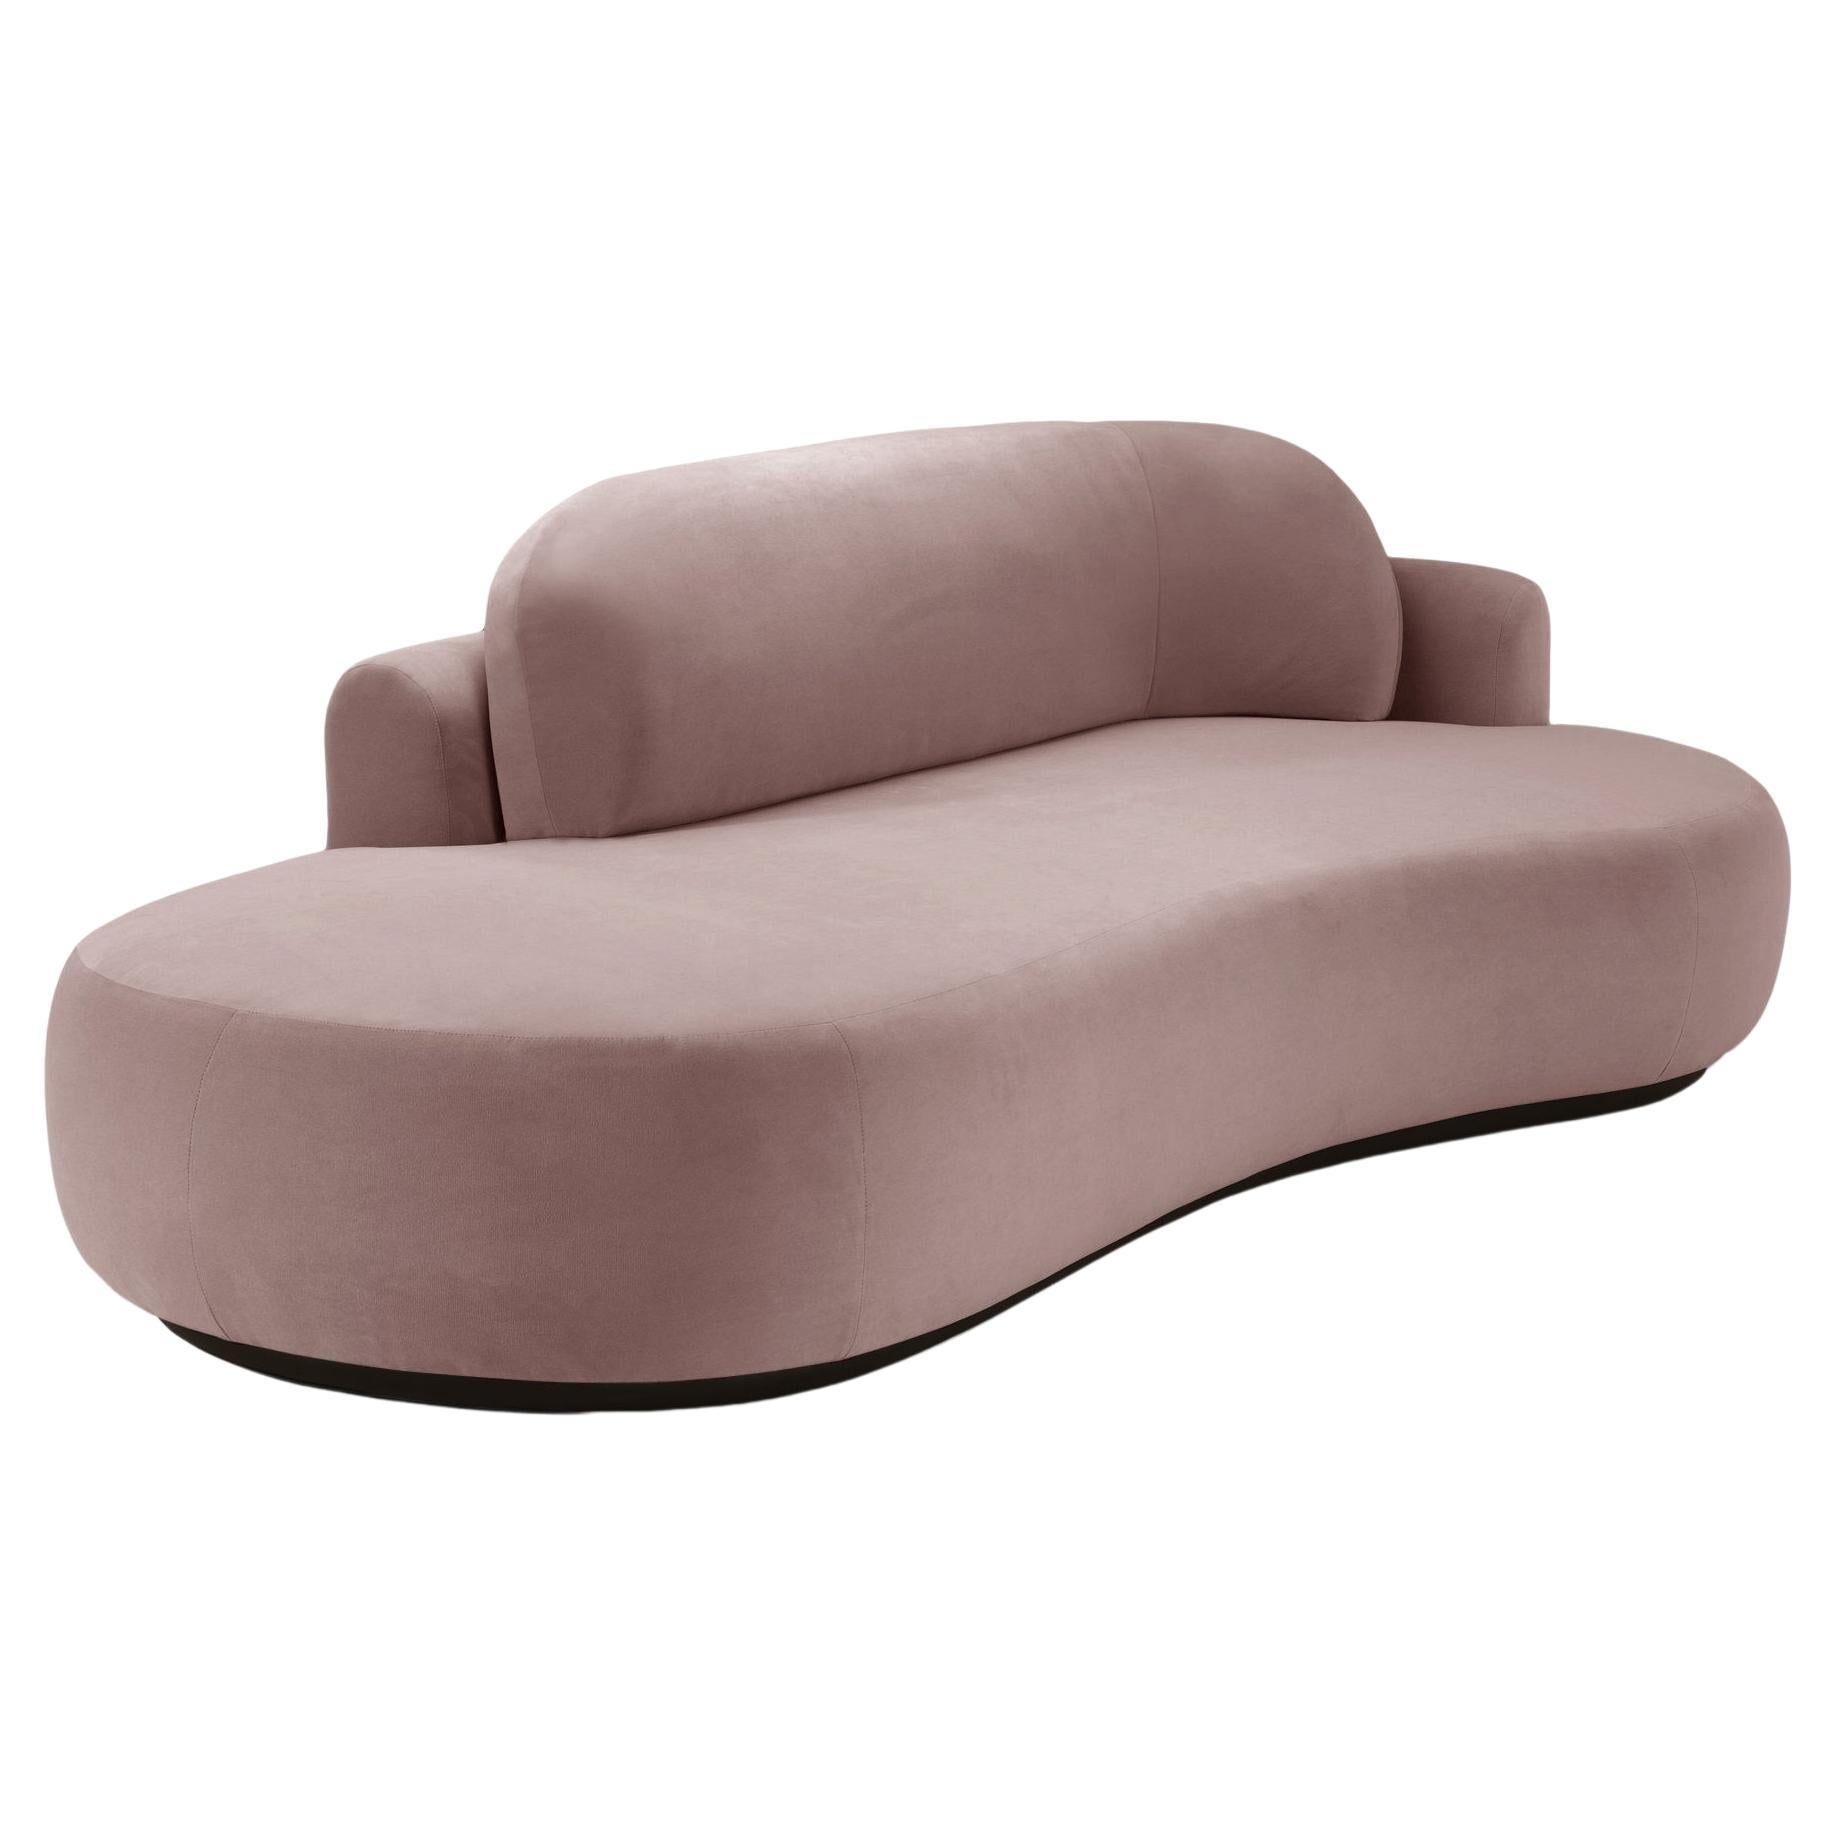 Naked Curved Sofa Single with Beech Ash-056-5 and Barcelona Lotus